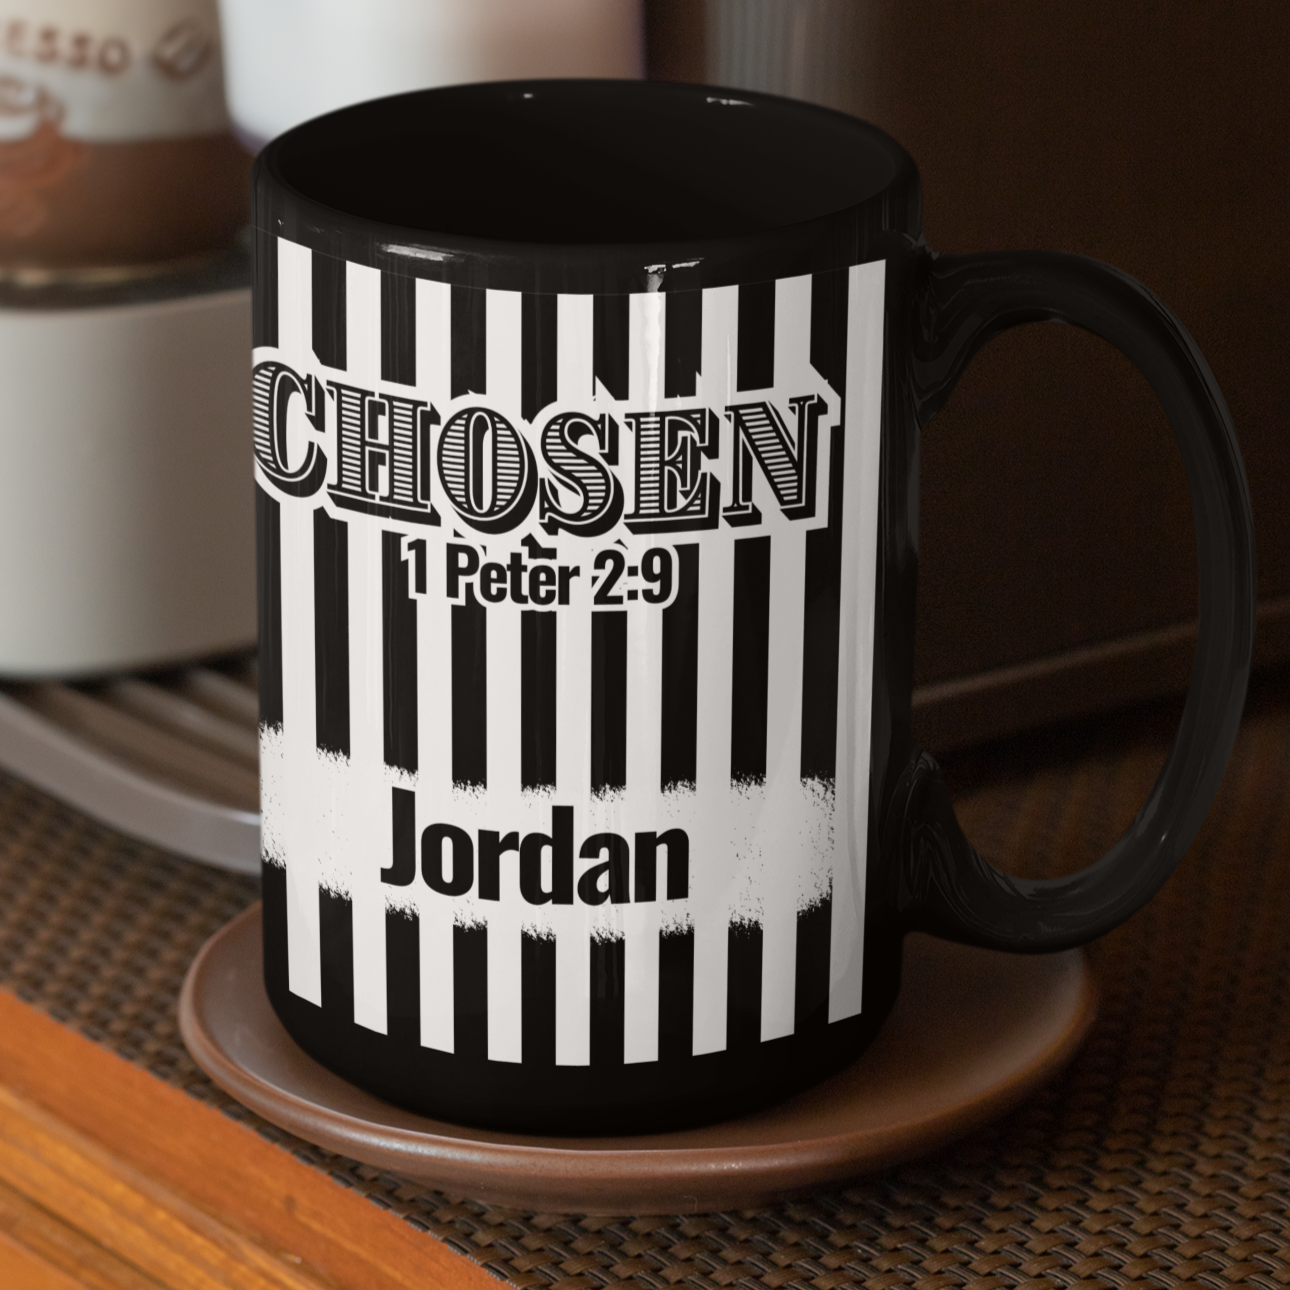 Chosen Black and White Stripe Gift Mug